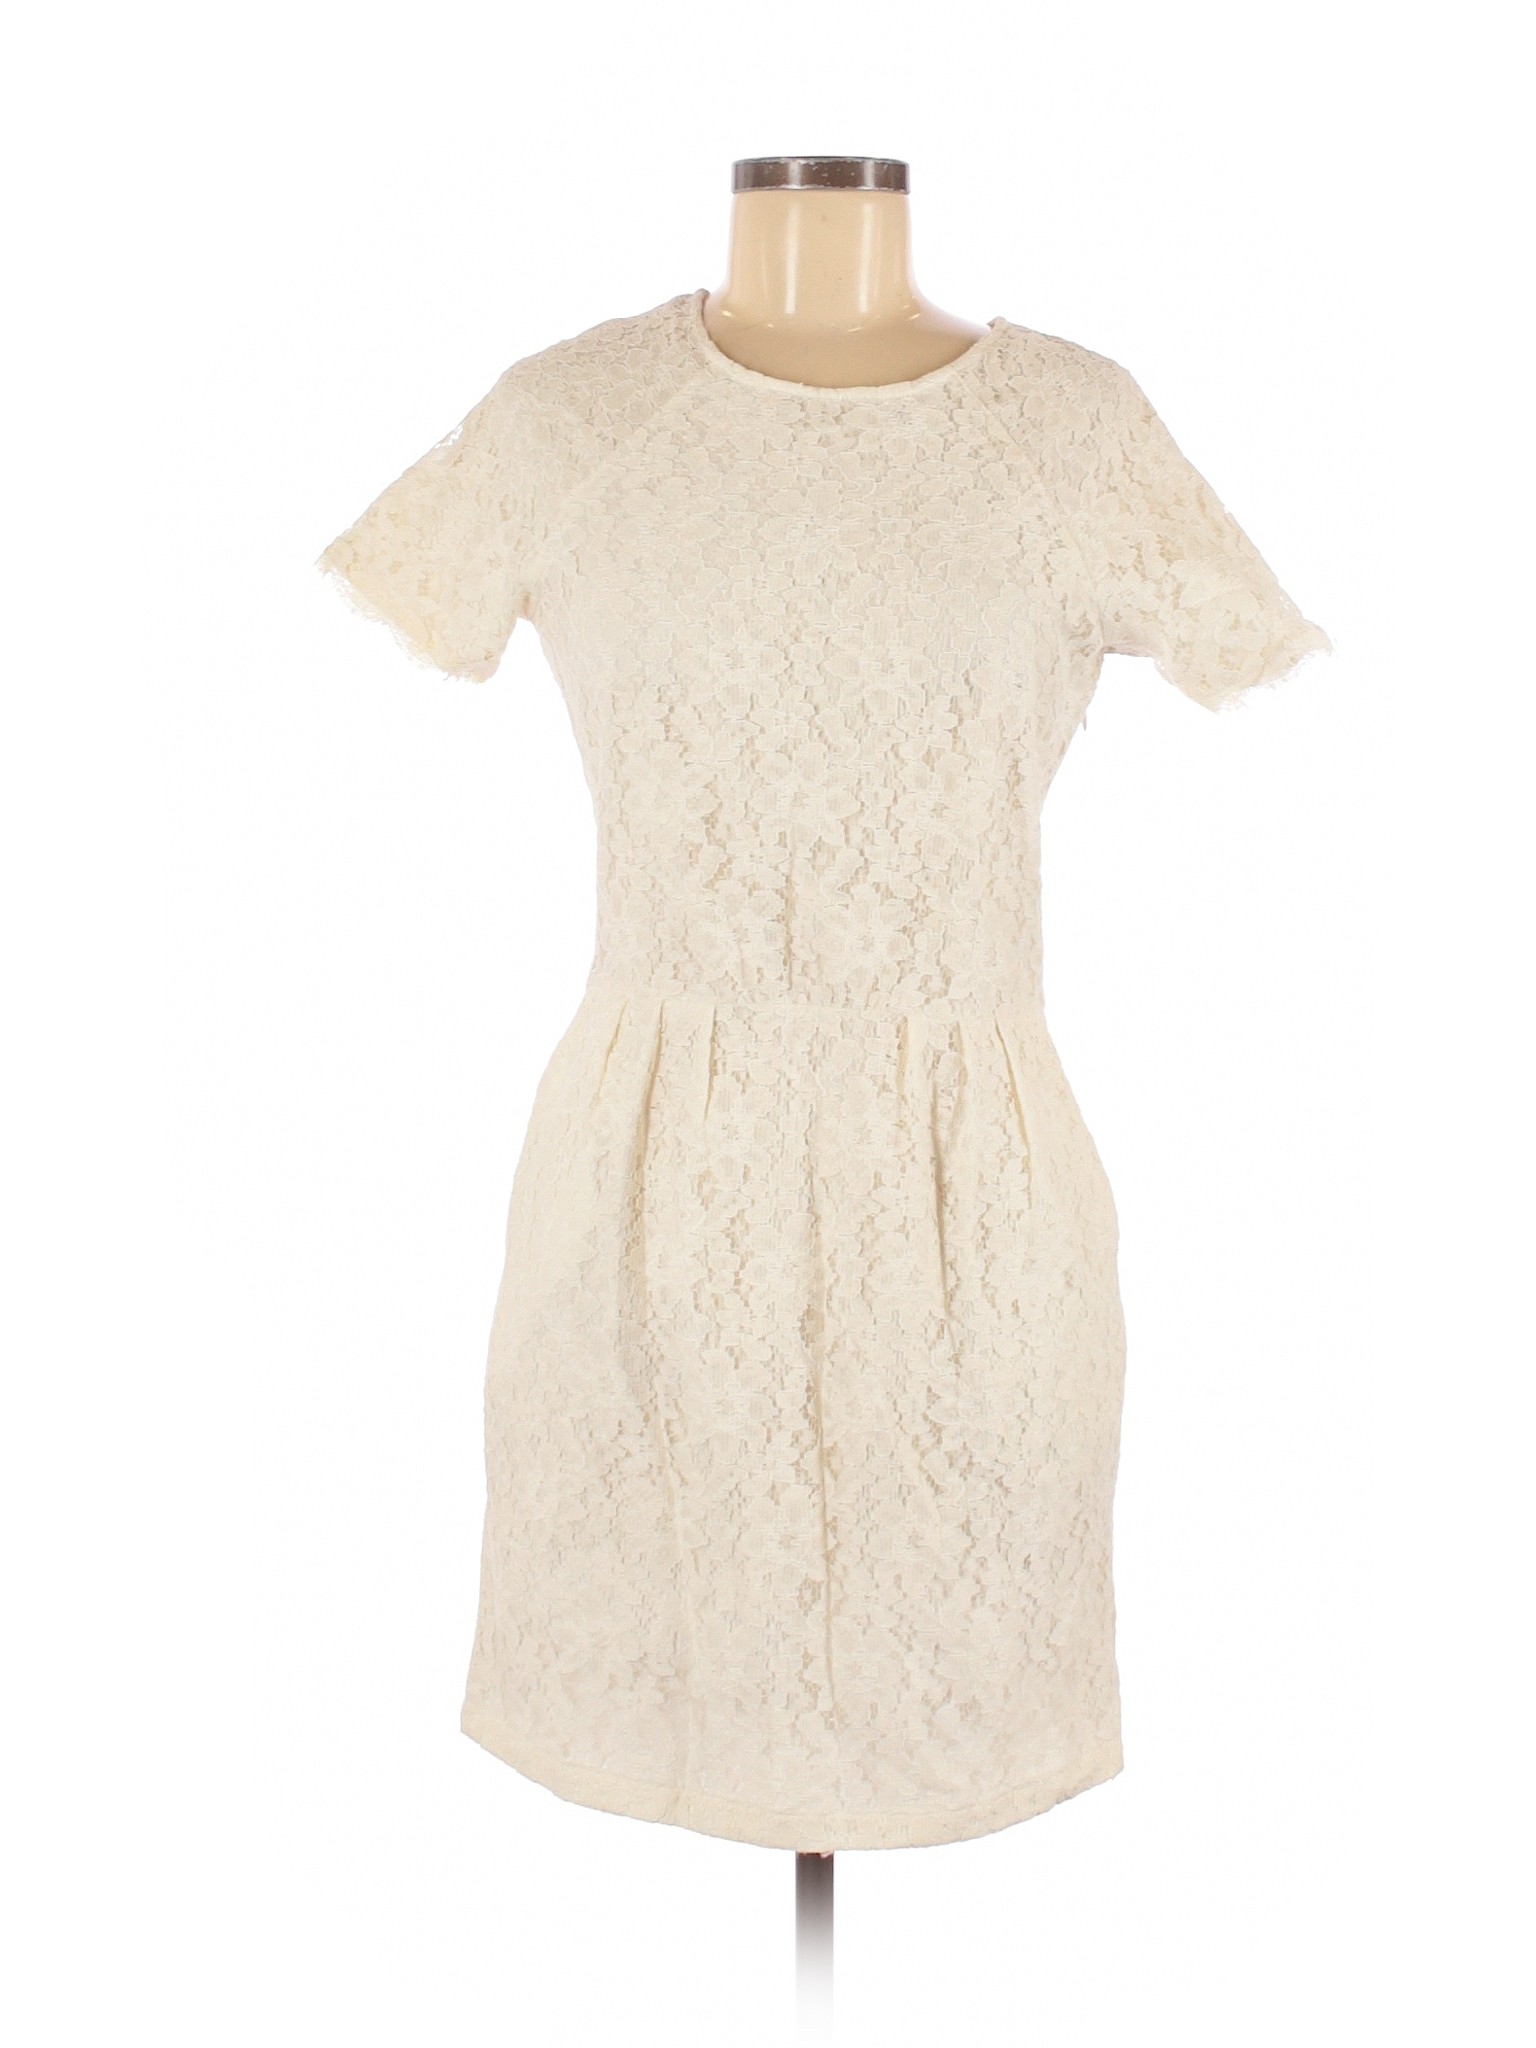 Dolce Vita Women Ivory Cocktail Dress M | eBay